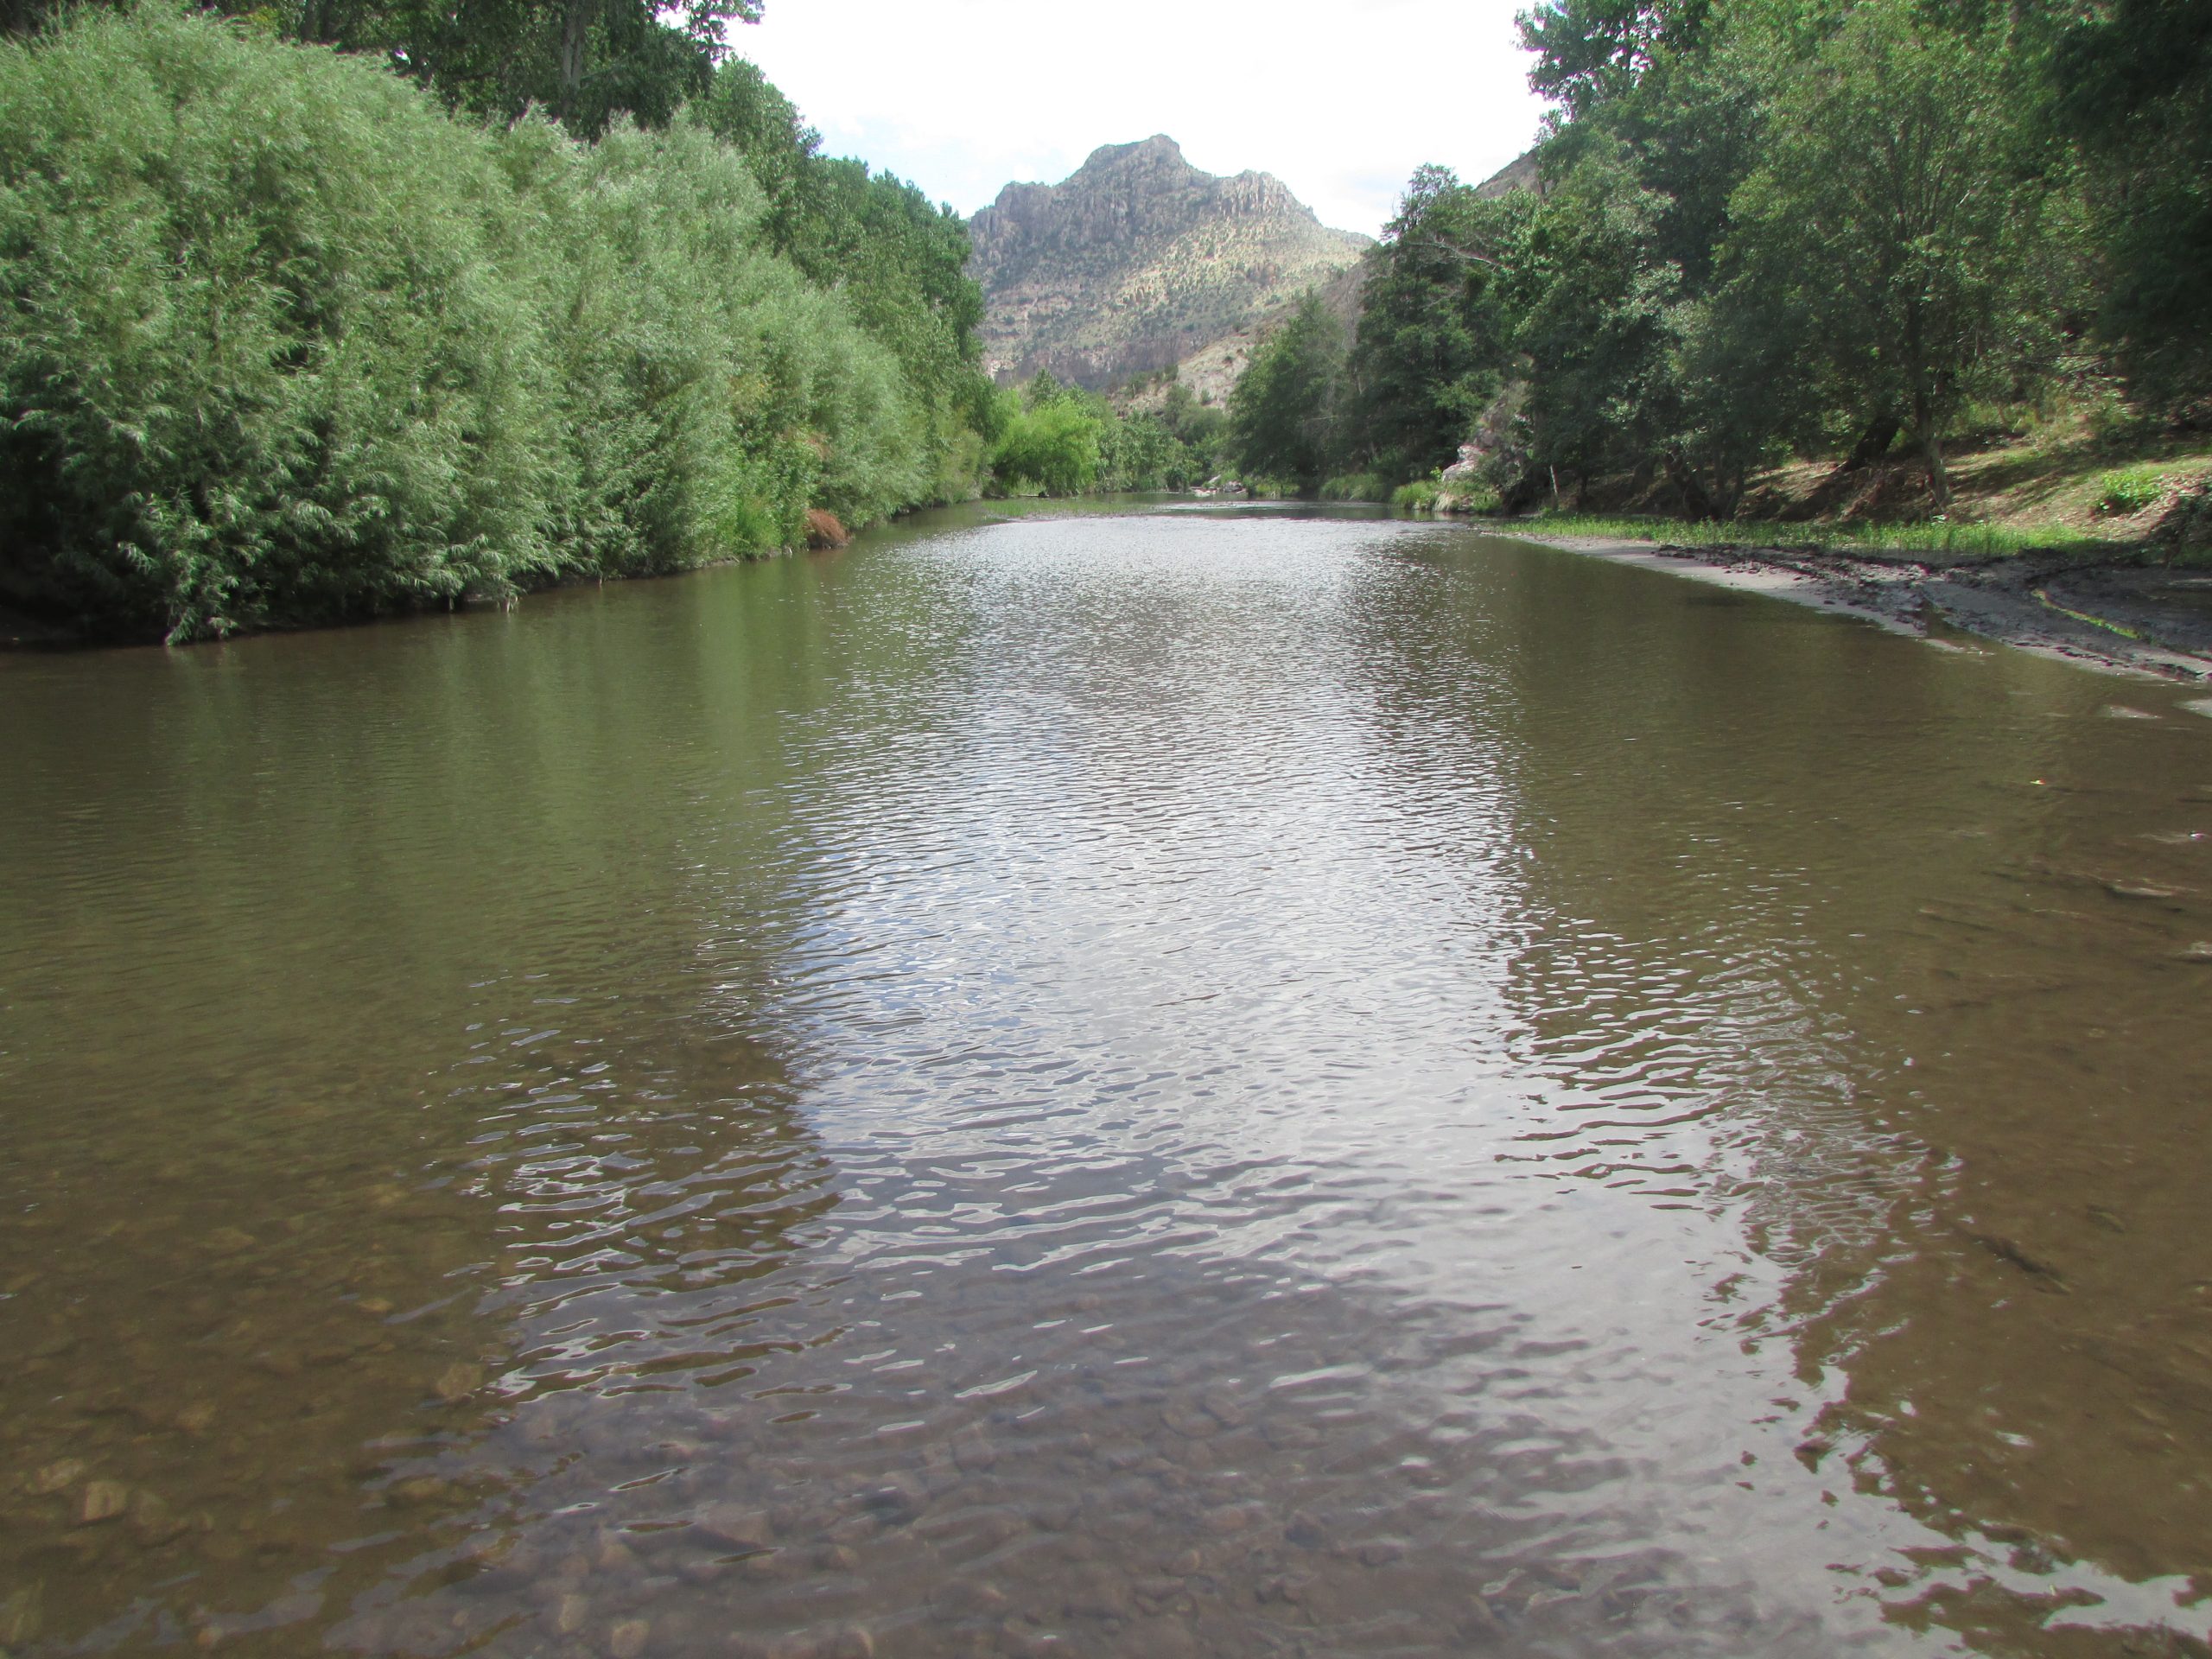 DOI denies funding for Gila River diversion project